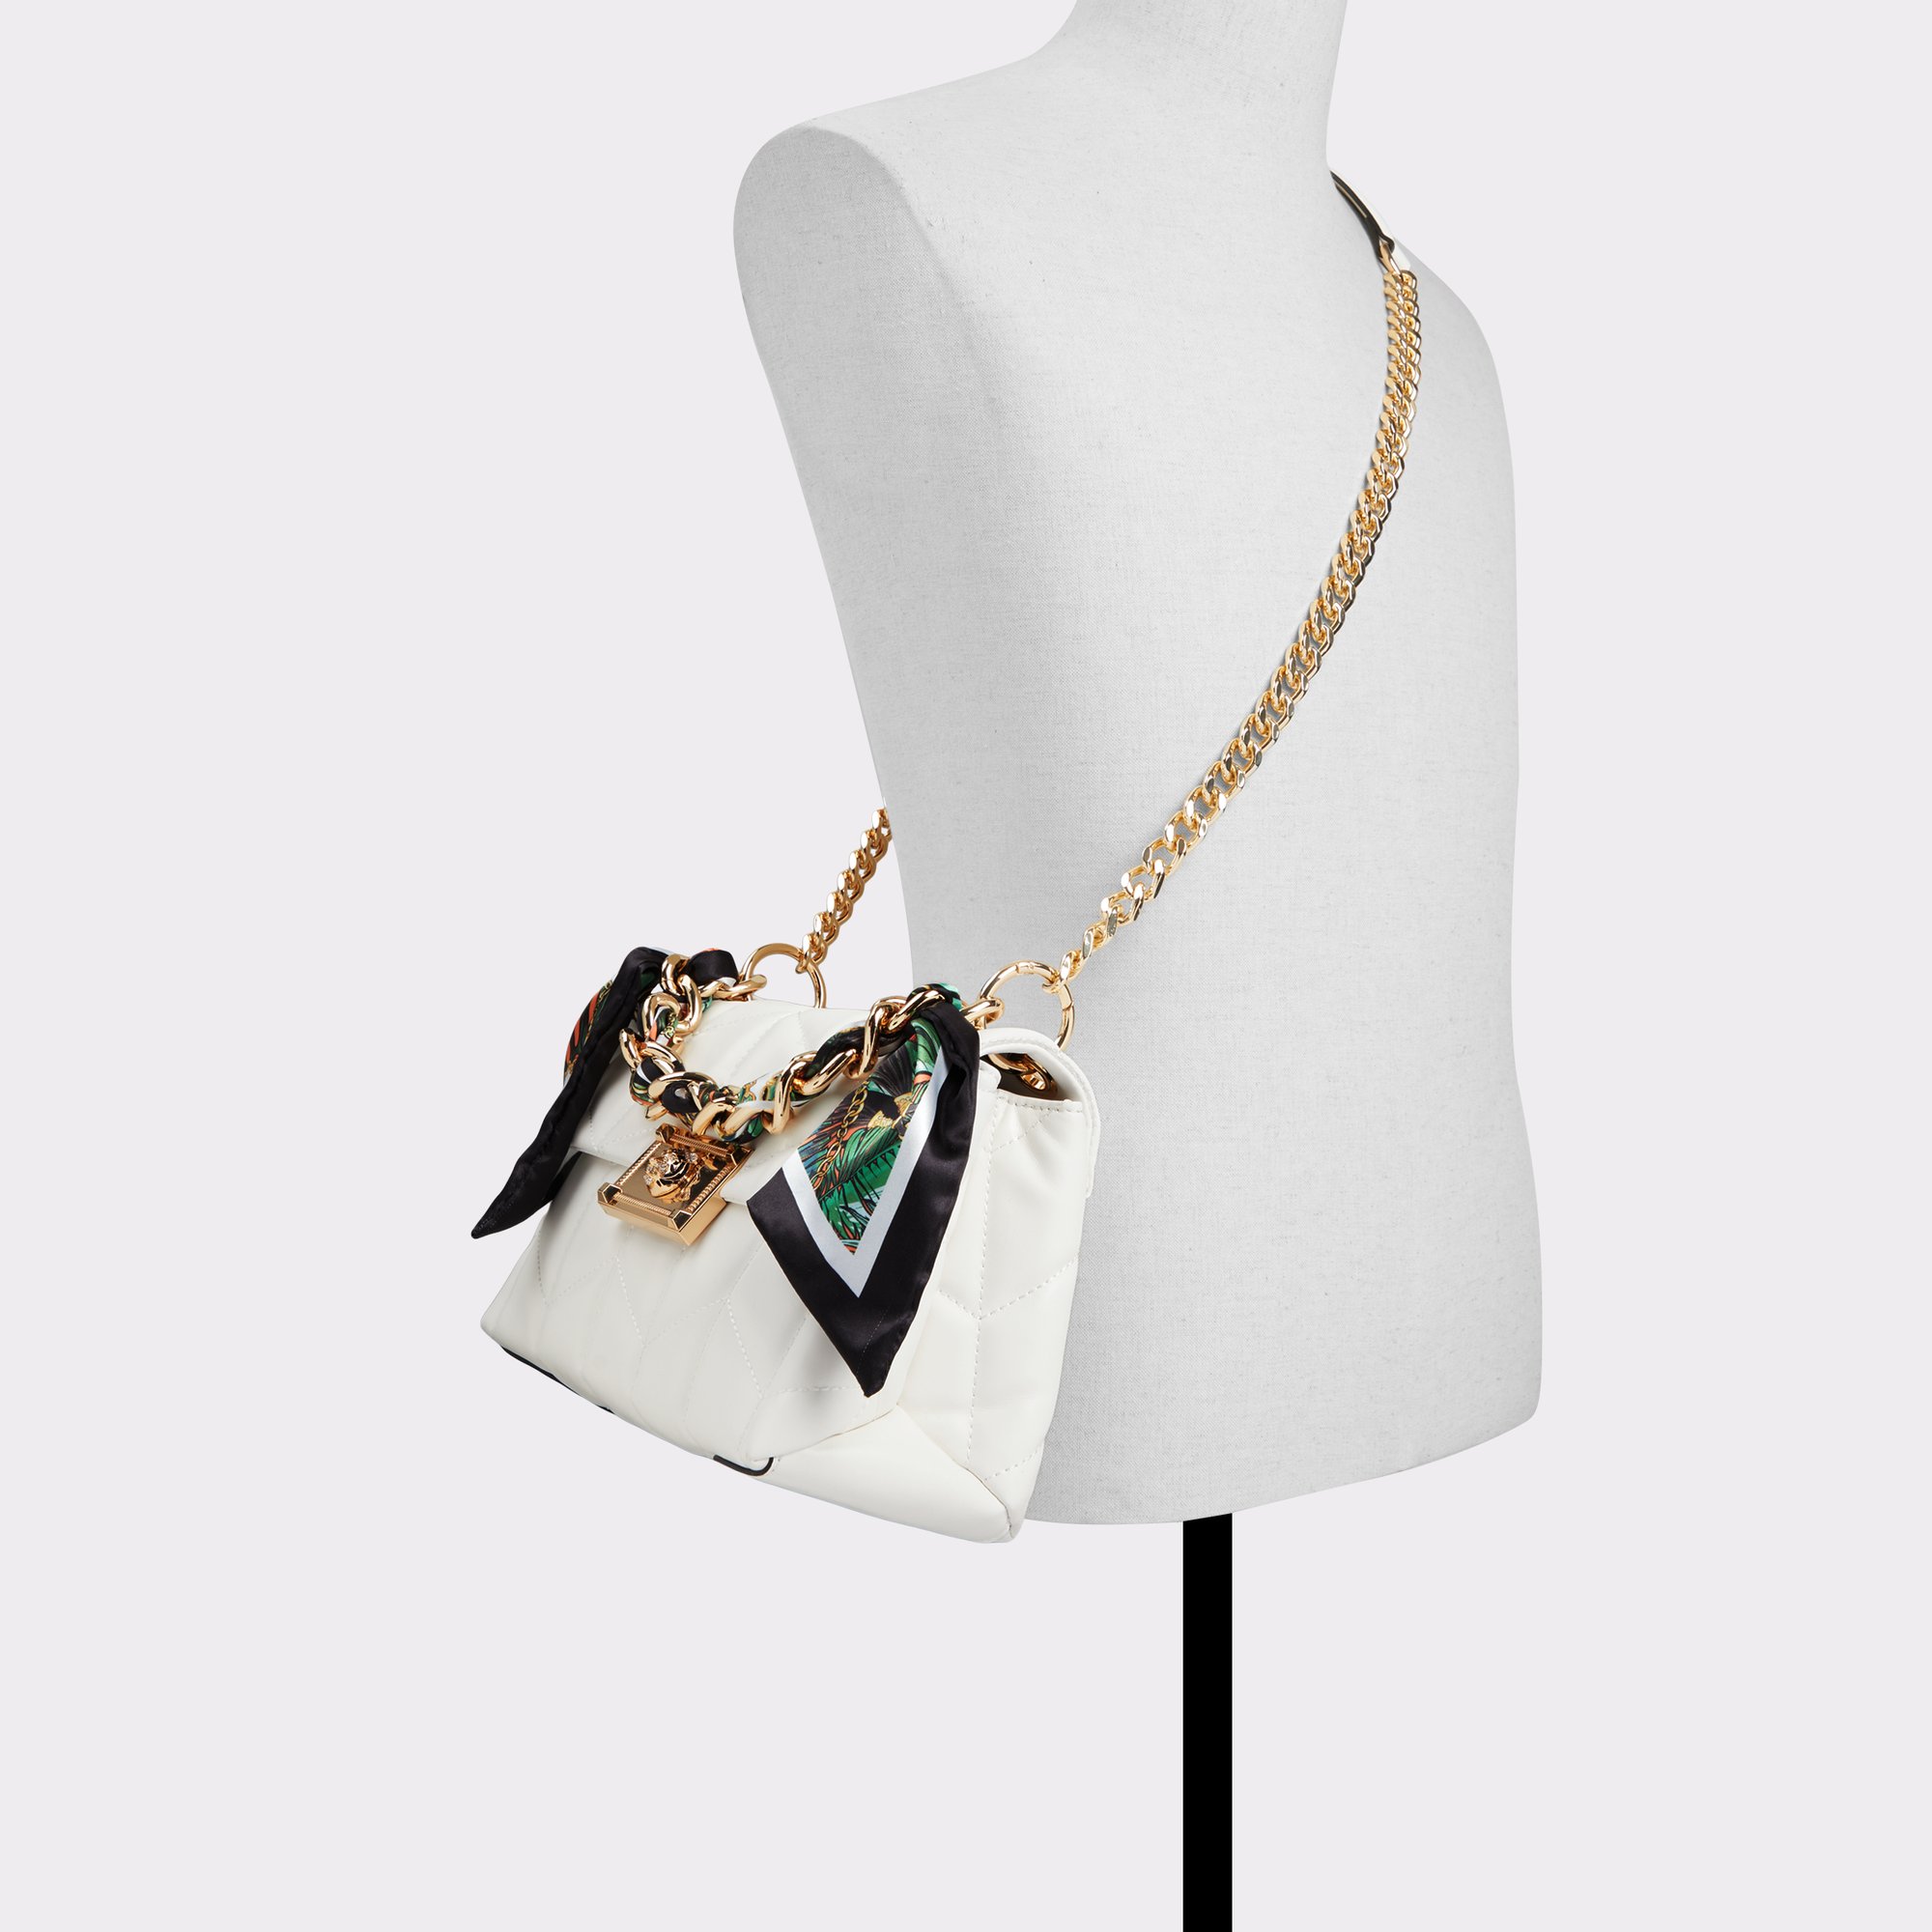 Jermeyyx White Women's Crossbody Bags | ALDO US